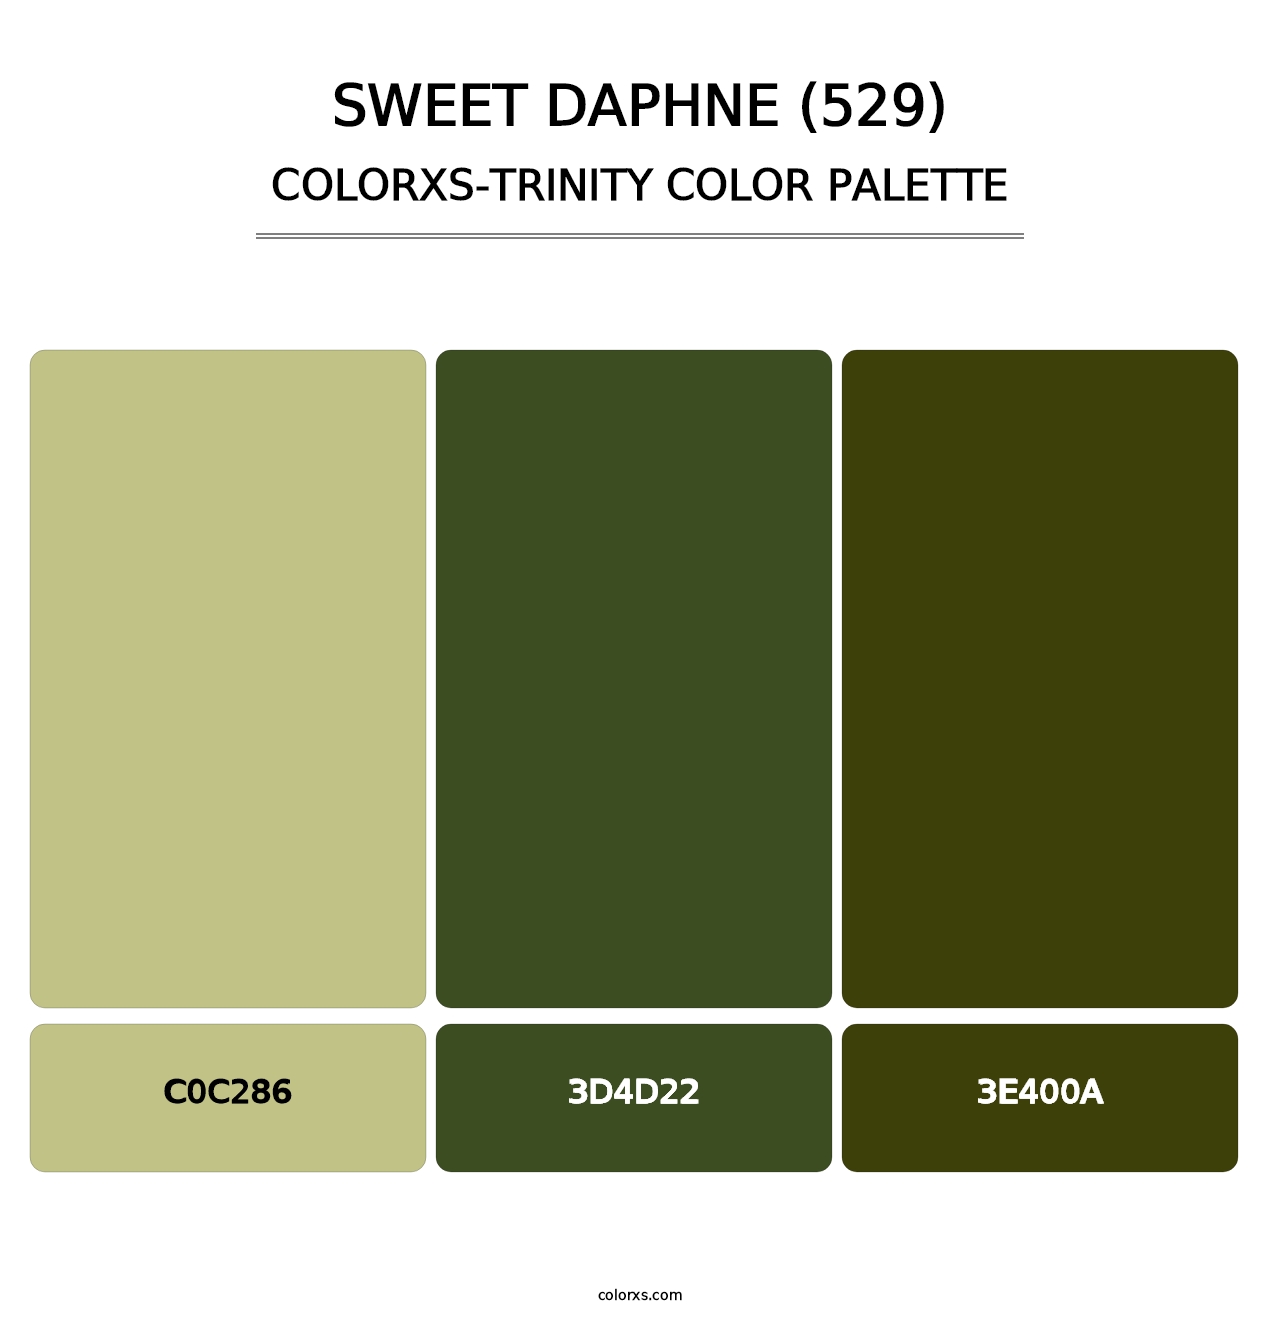 Sweet Daphne (529) - Colorxs Trinity Palette